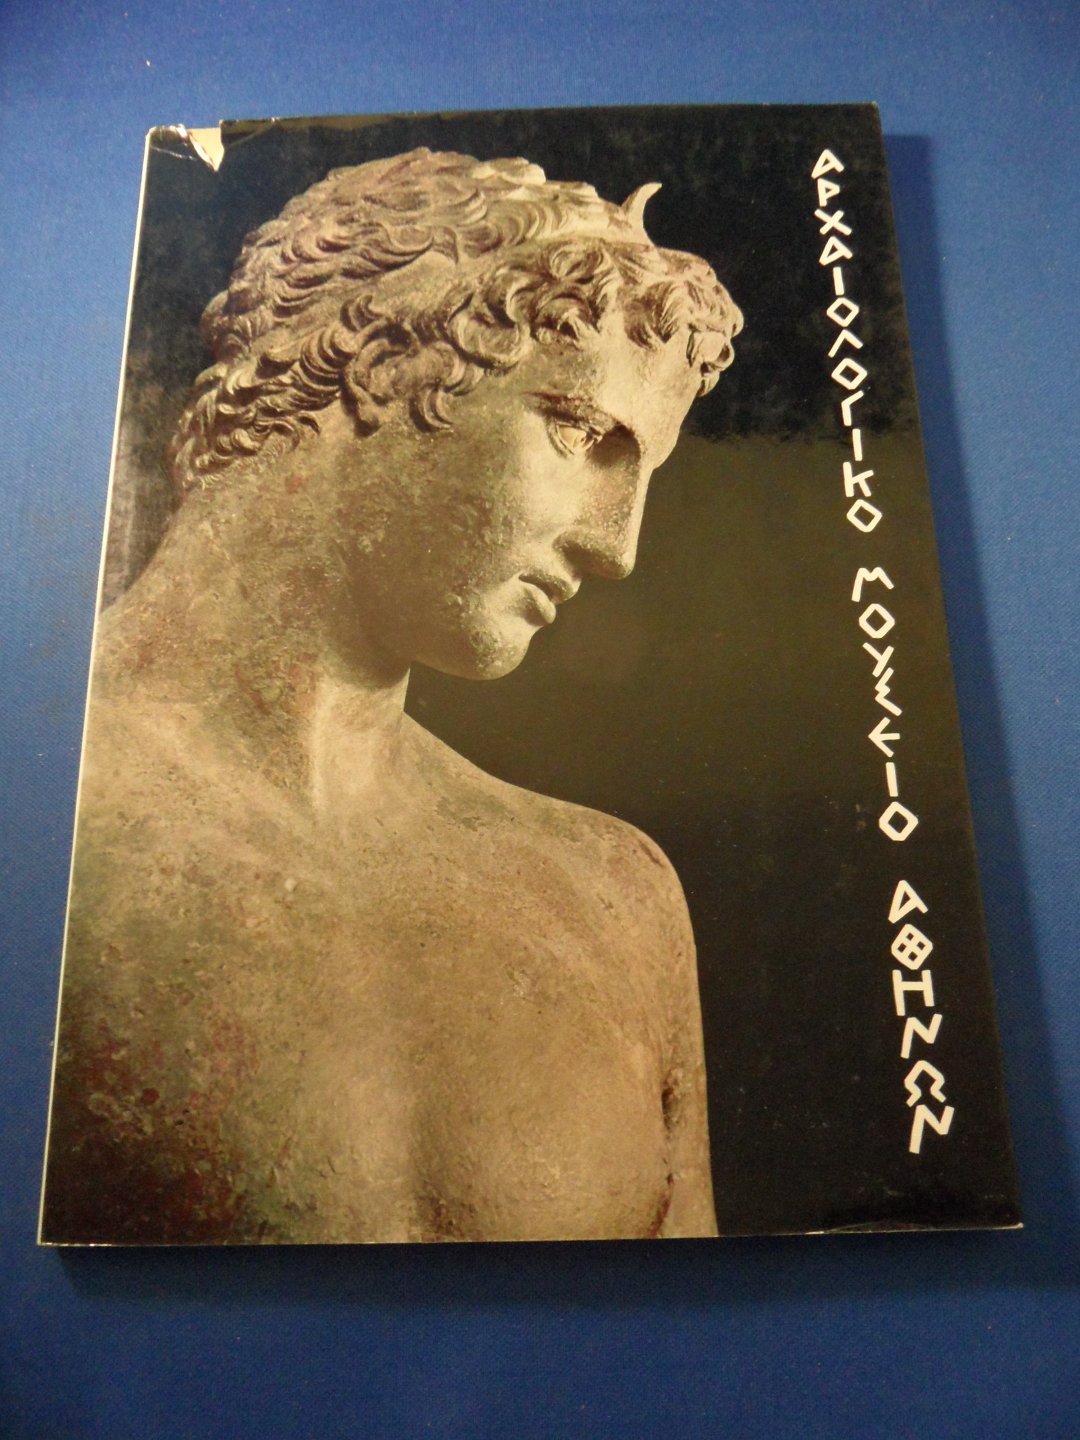 Meletzis, Spyros and Papadakis, Helen - National museum of archaeology Athens